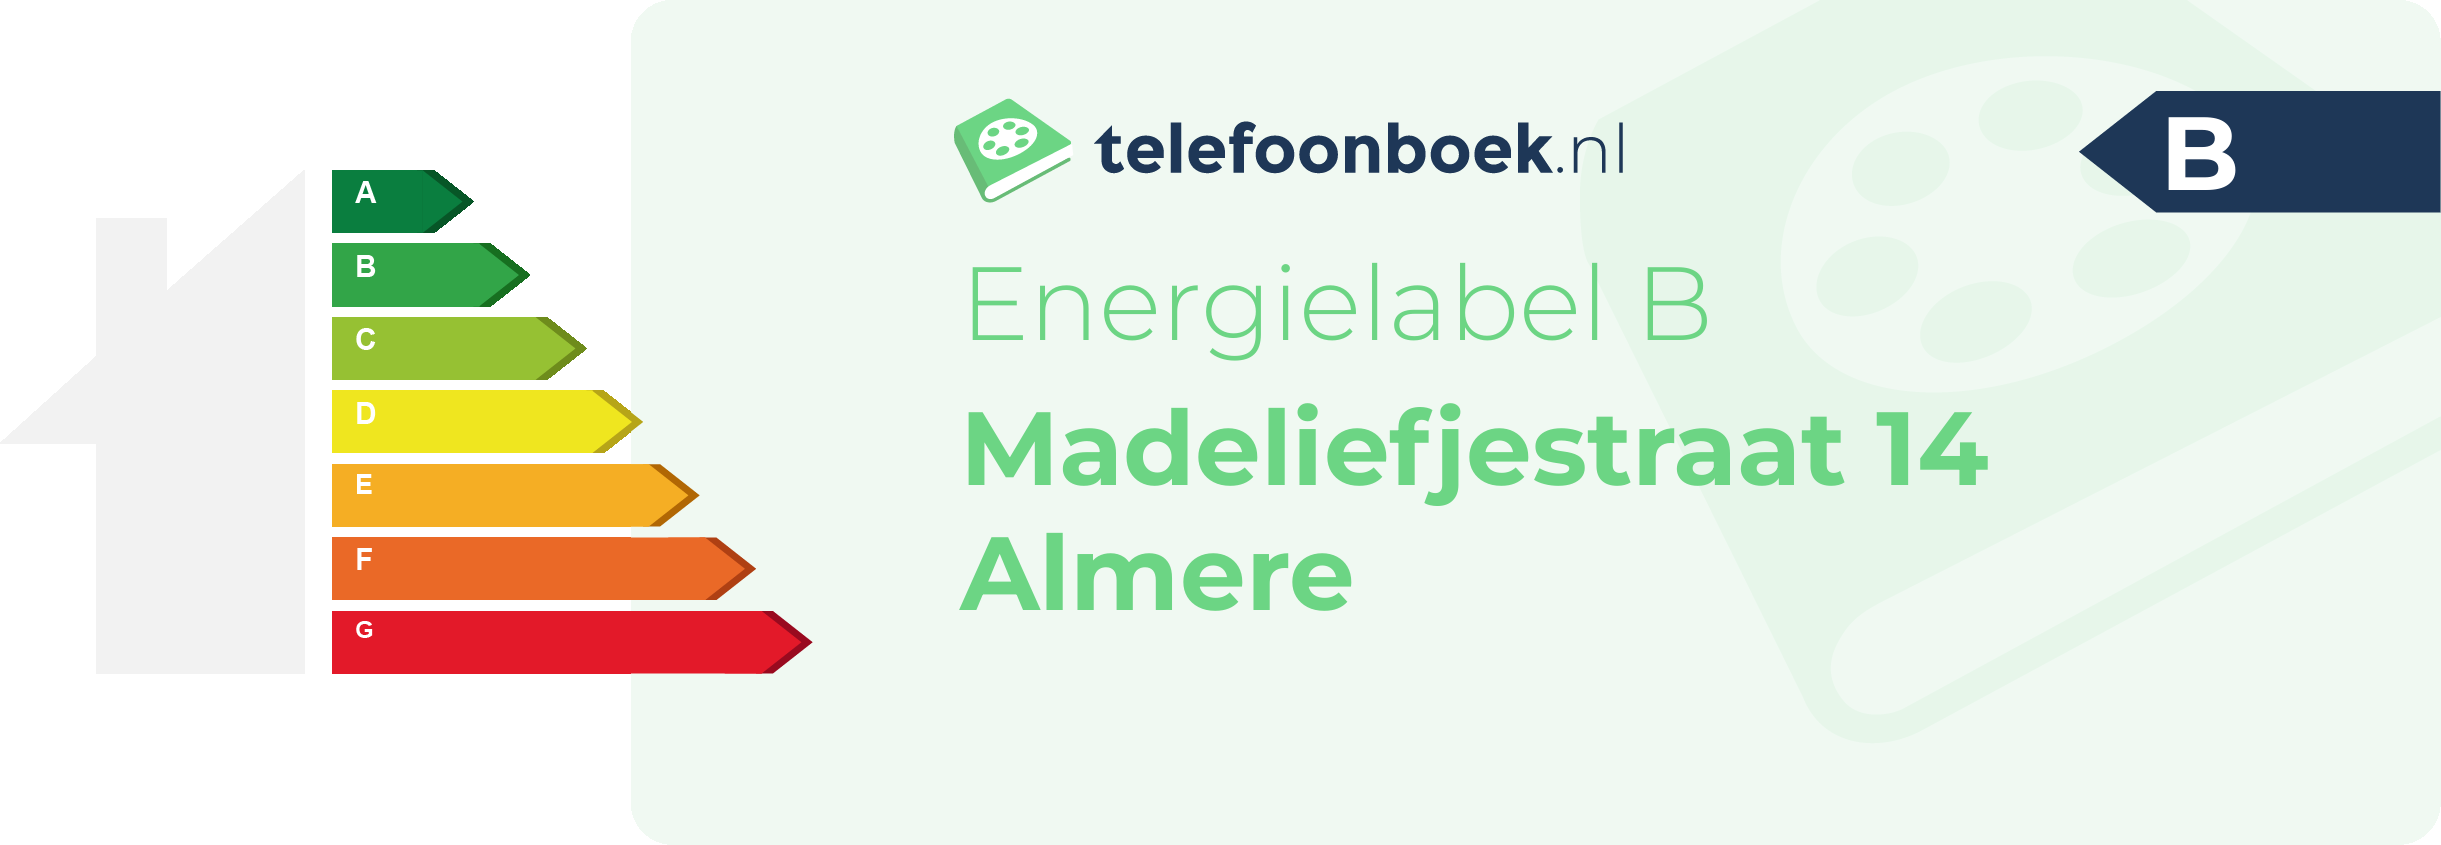 Energielabel Madeliefjestraat 14 Almere